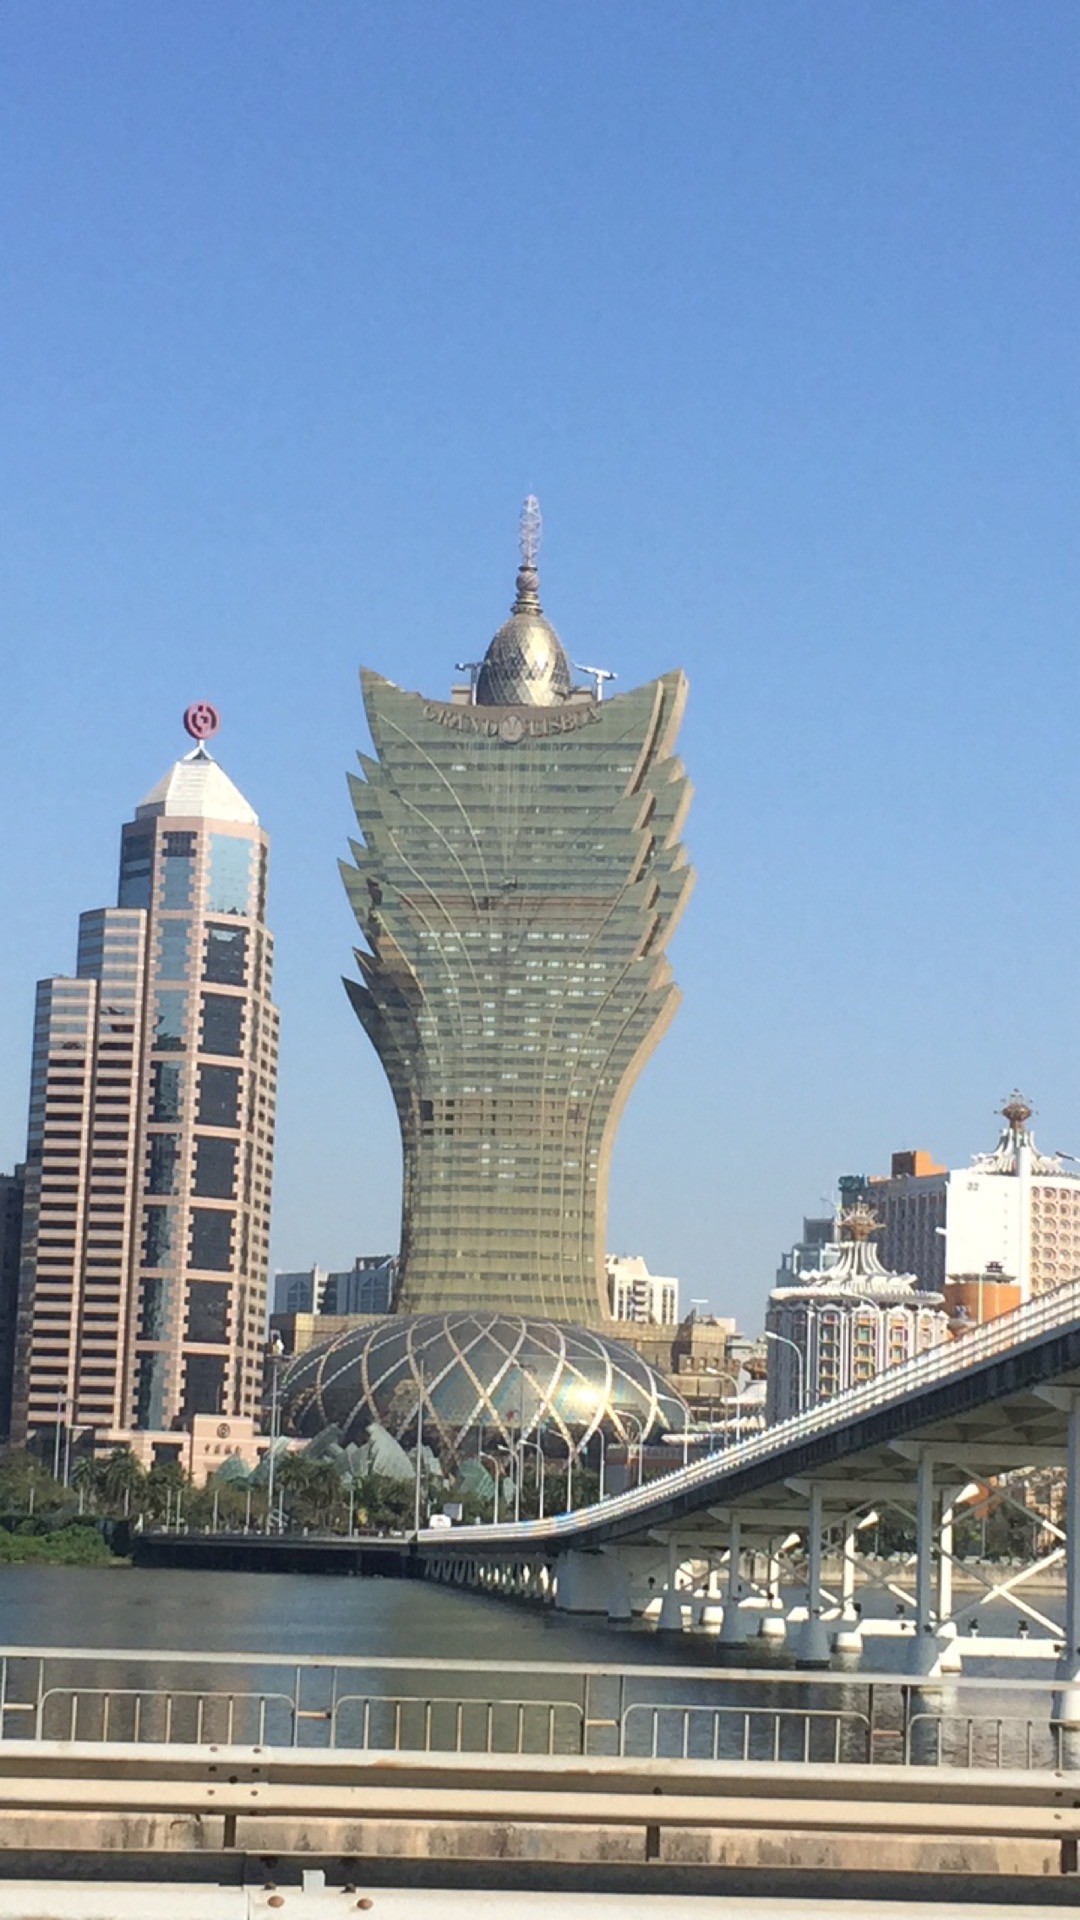 Grand Lisboa building in Macau. The world's highest tower climb